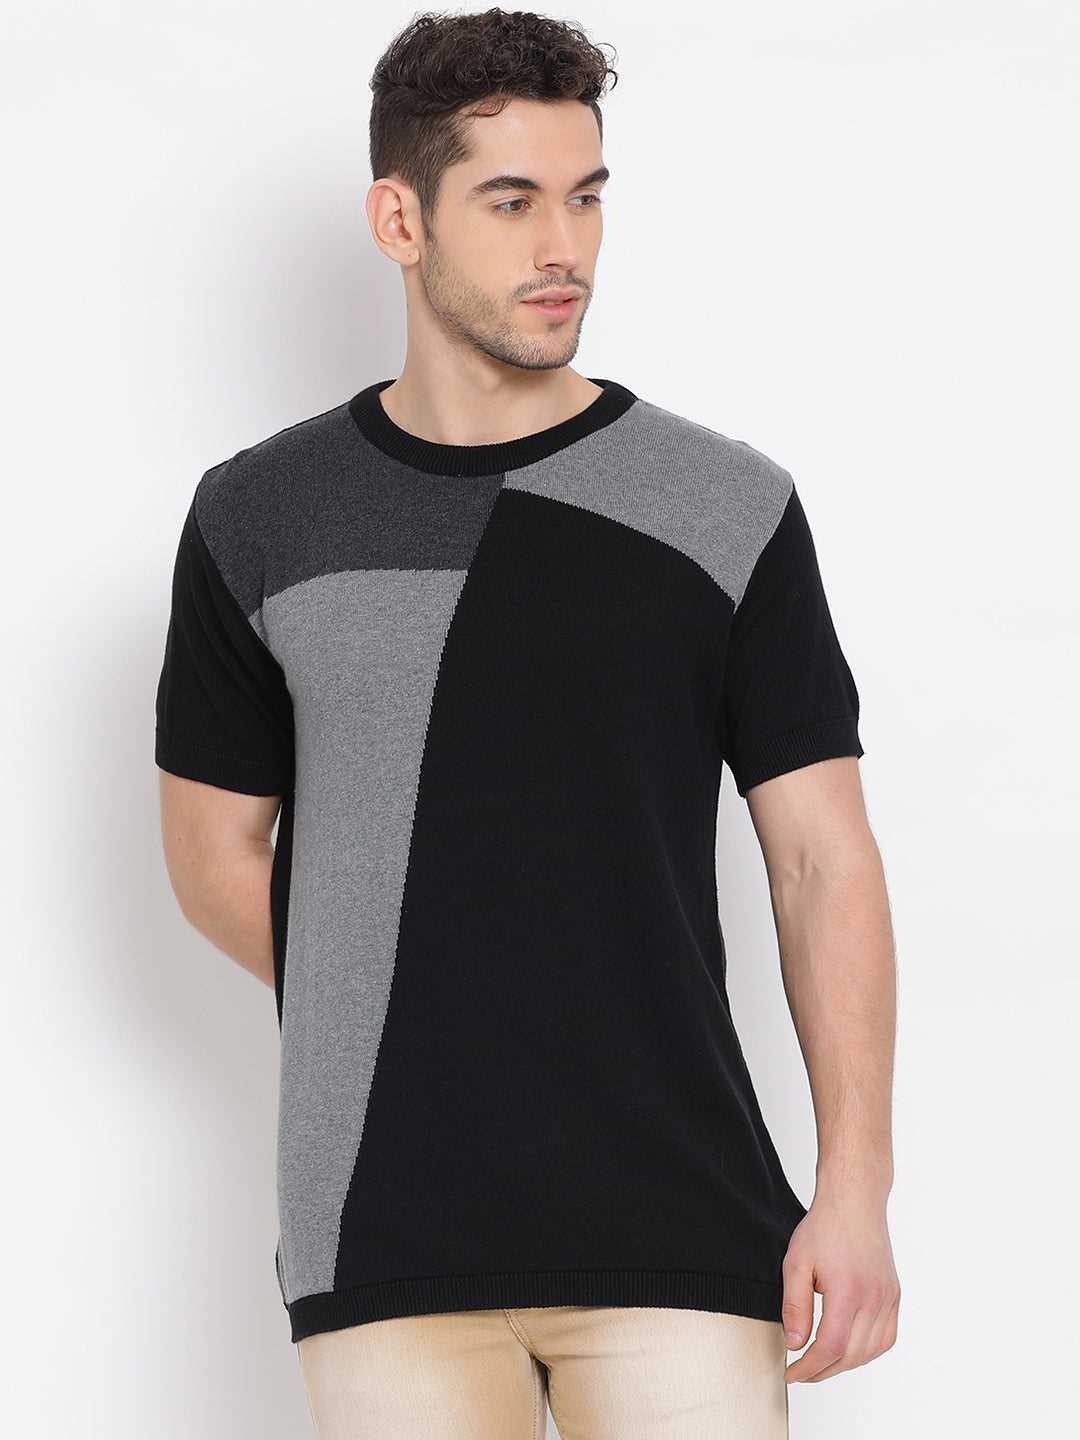 Cobb Black Striped Round Neck T-Shirt Black